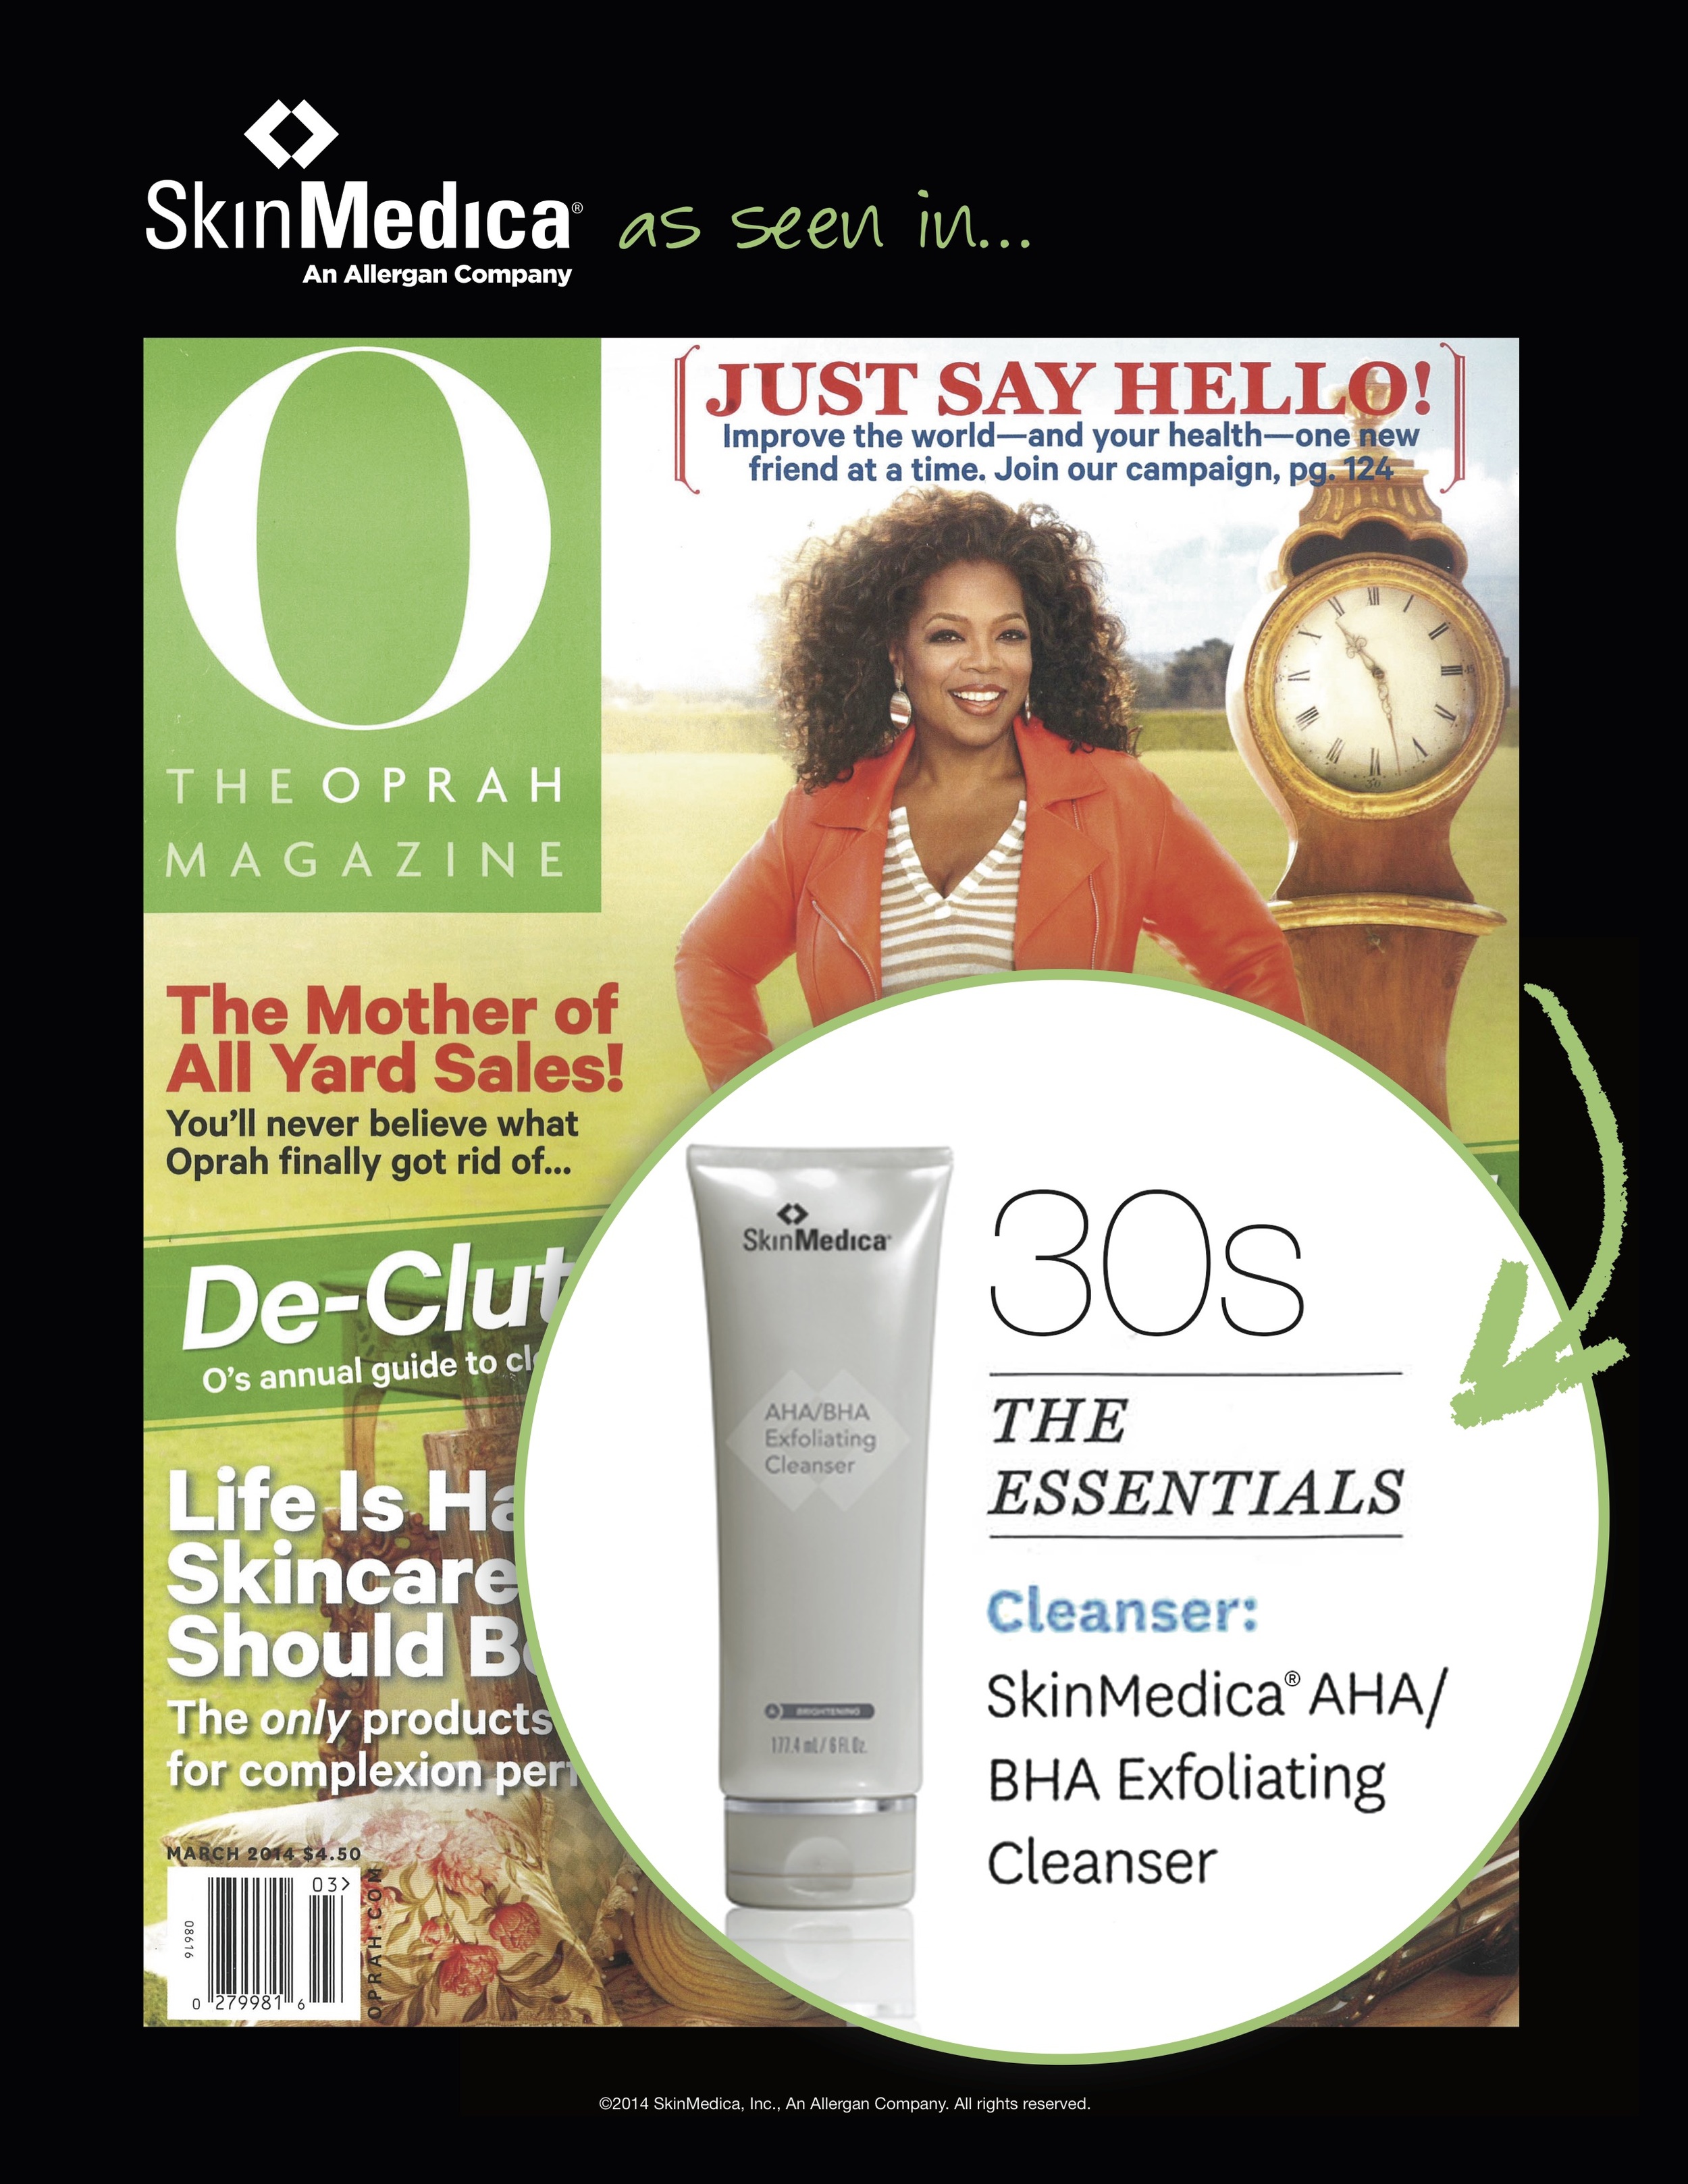 The-Oprah-Magazine-Aha-Bha-Exfoliating-Cleanser.jpg